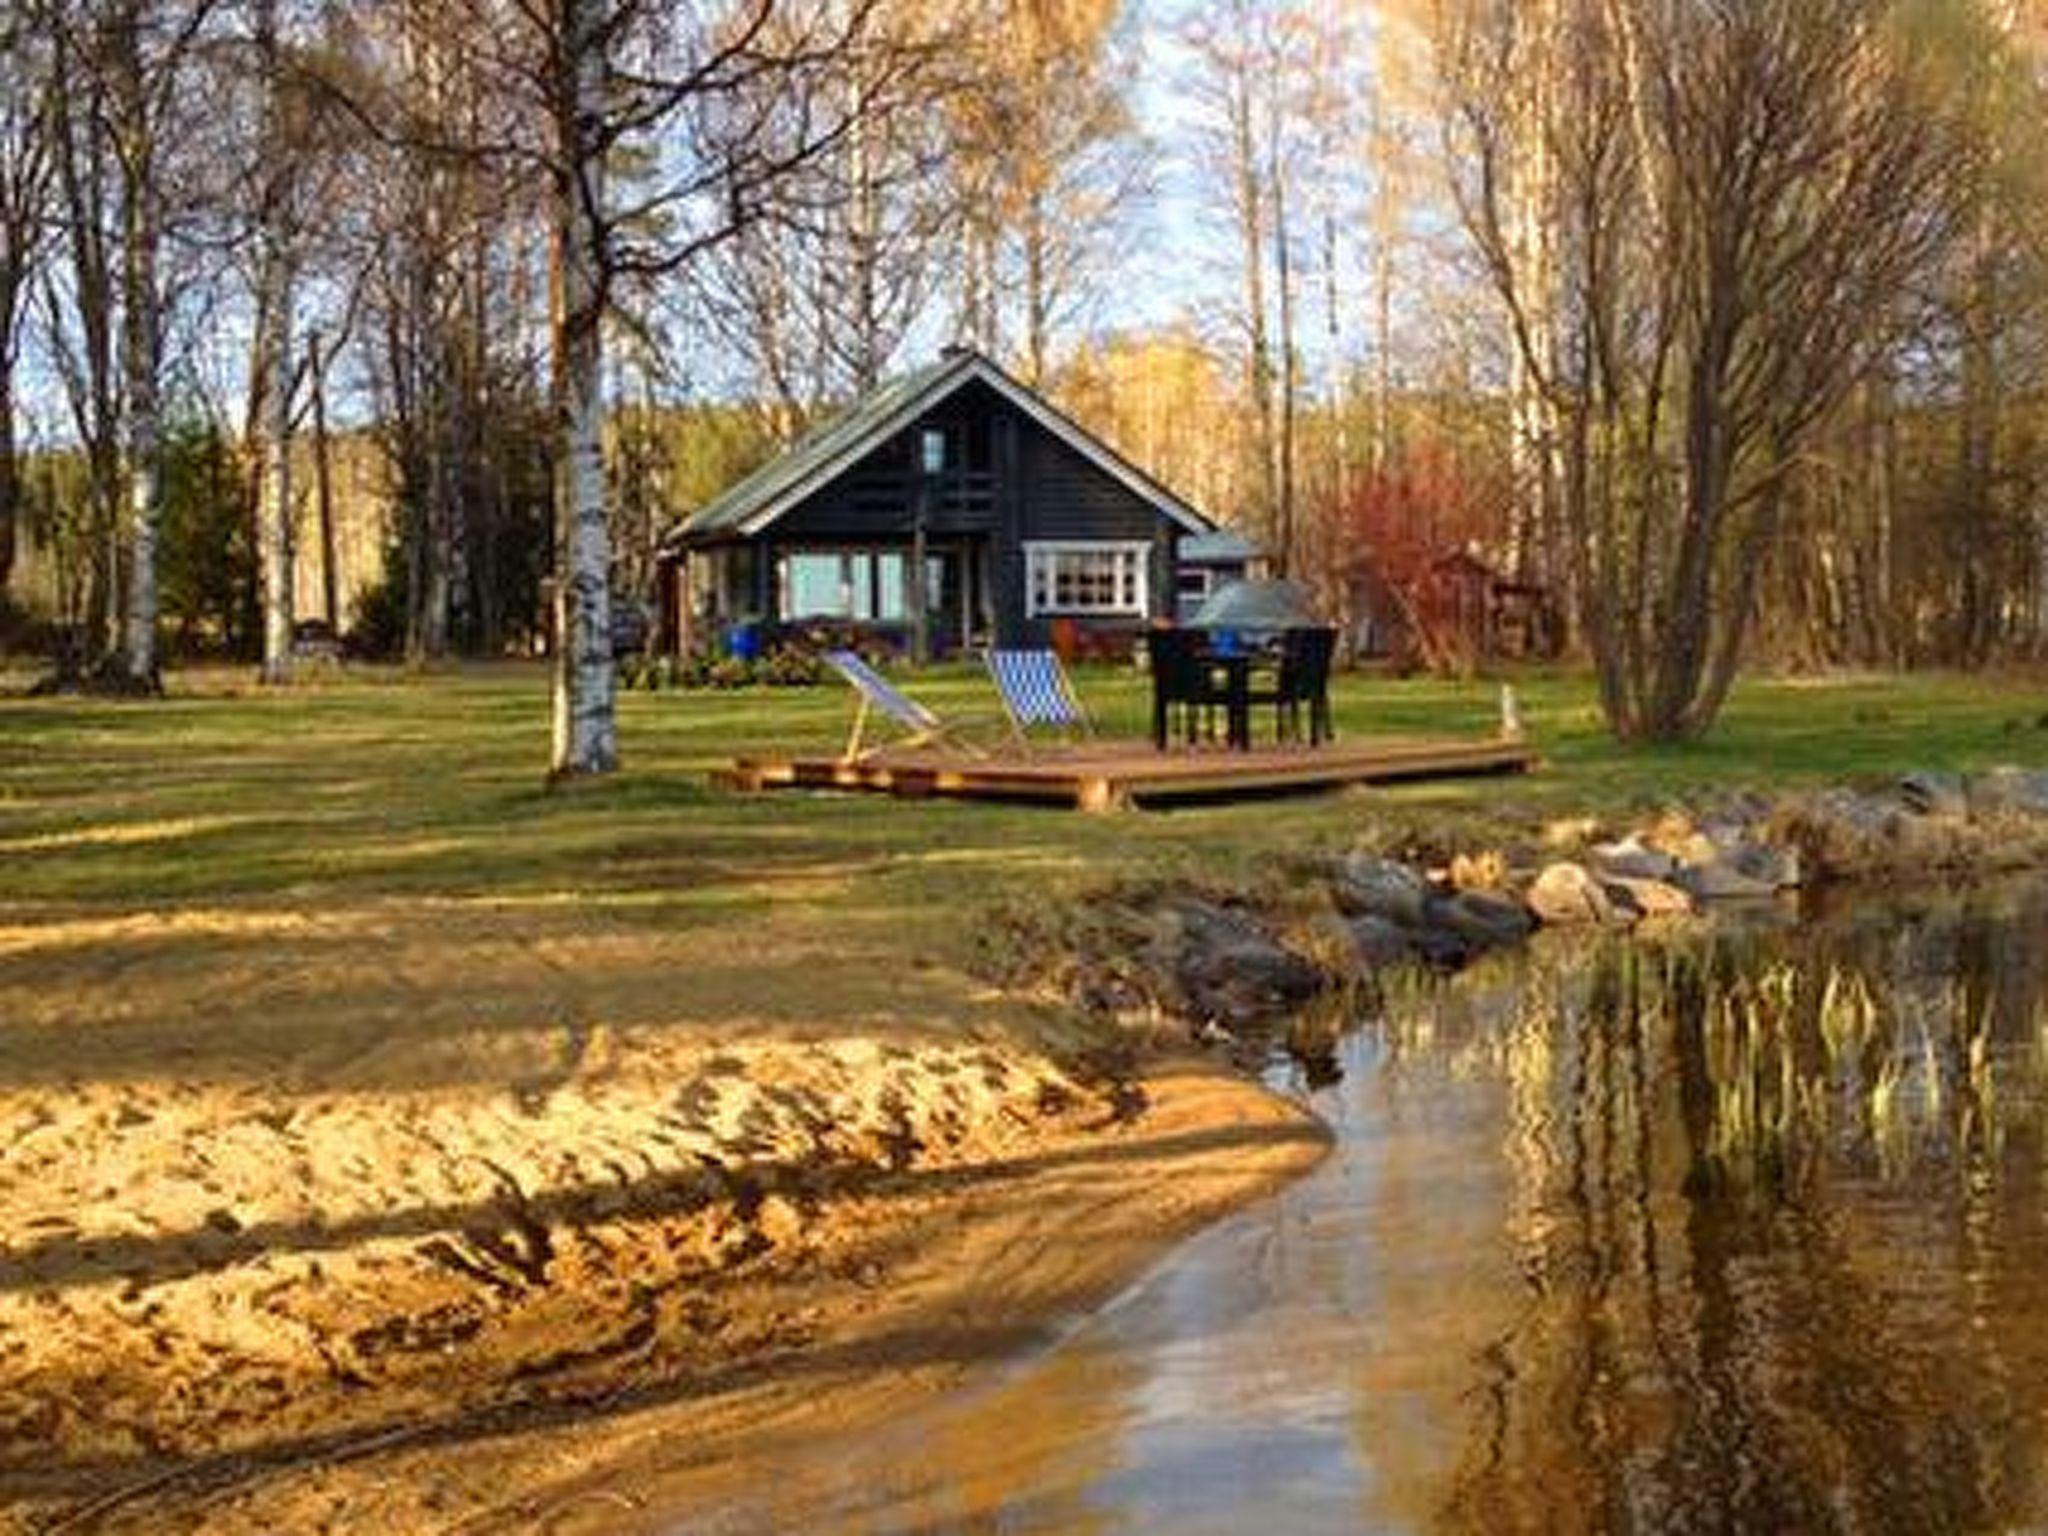 Photo 1 - 2 bedroom House in Valkeakoski with sauna